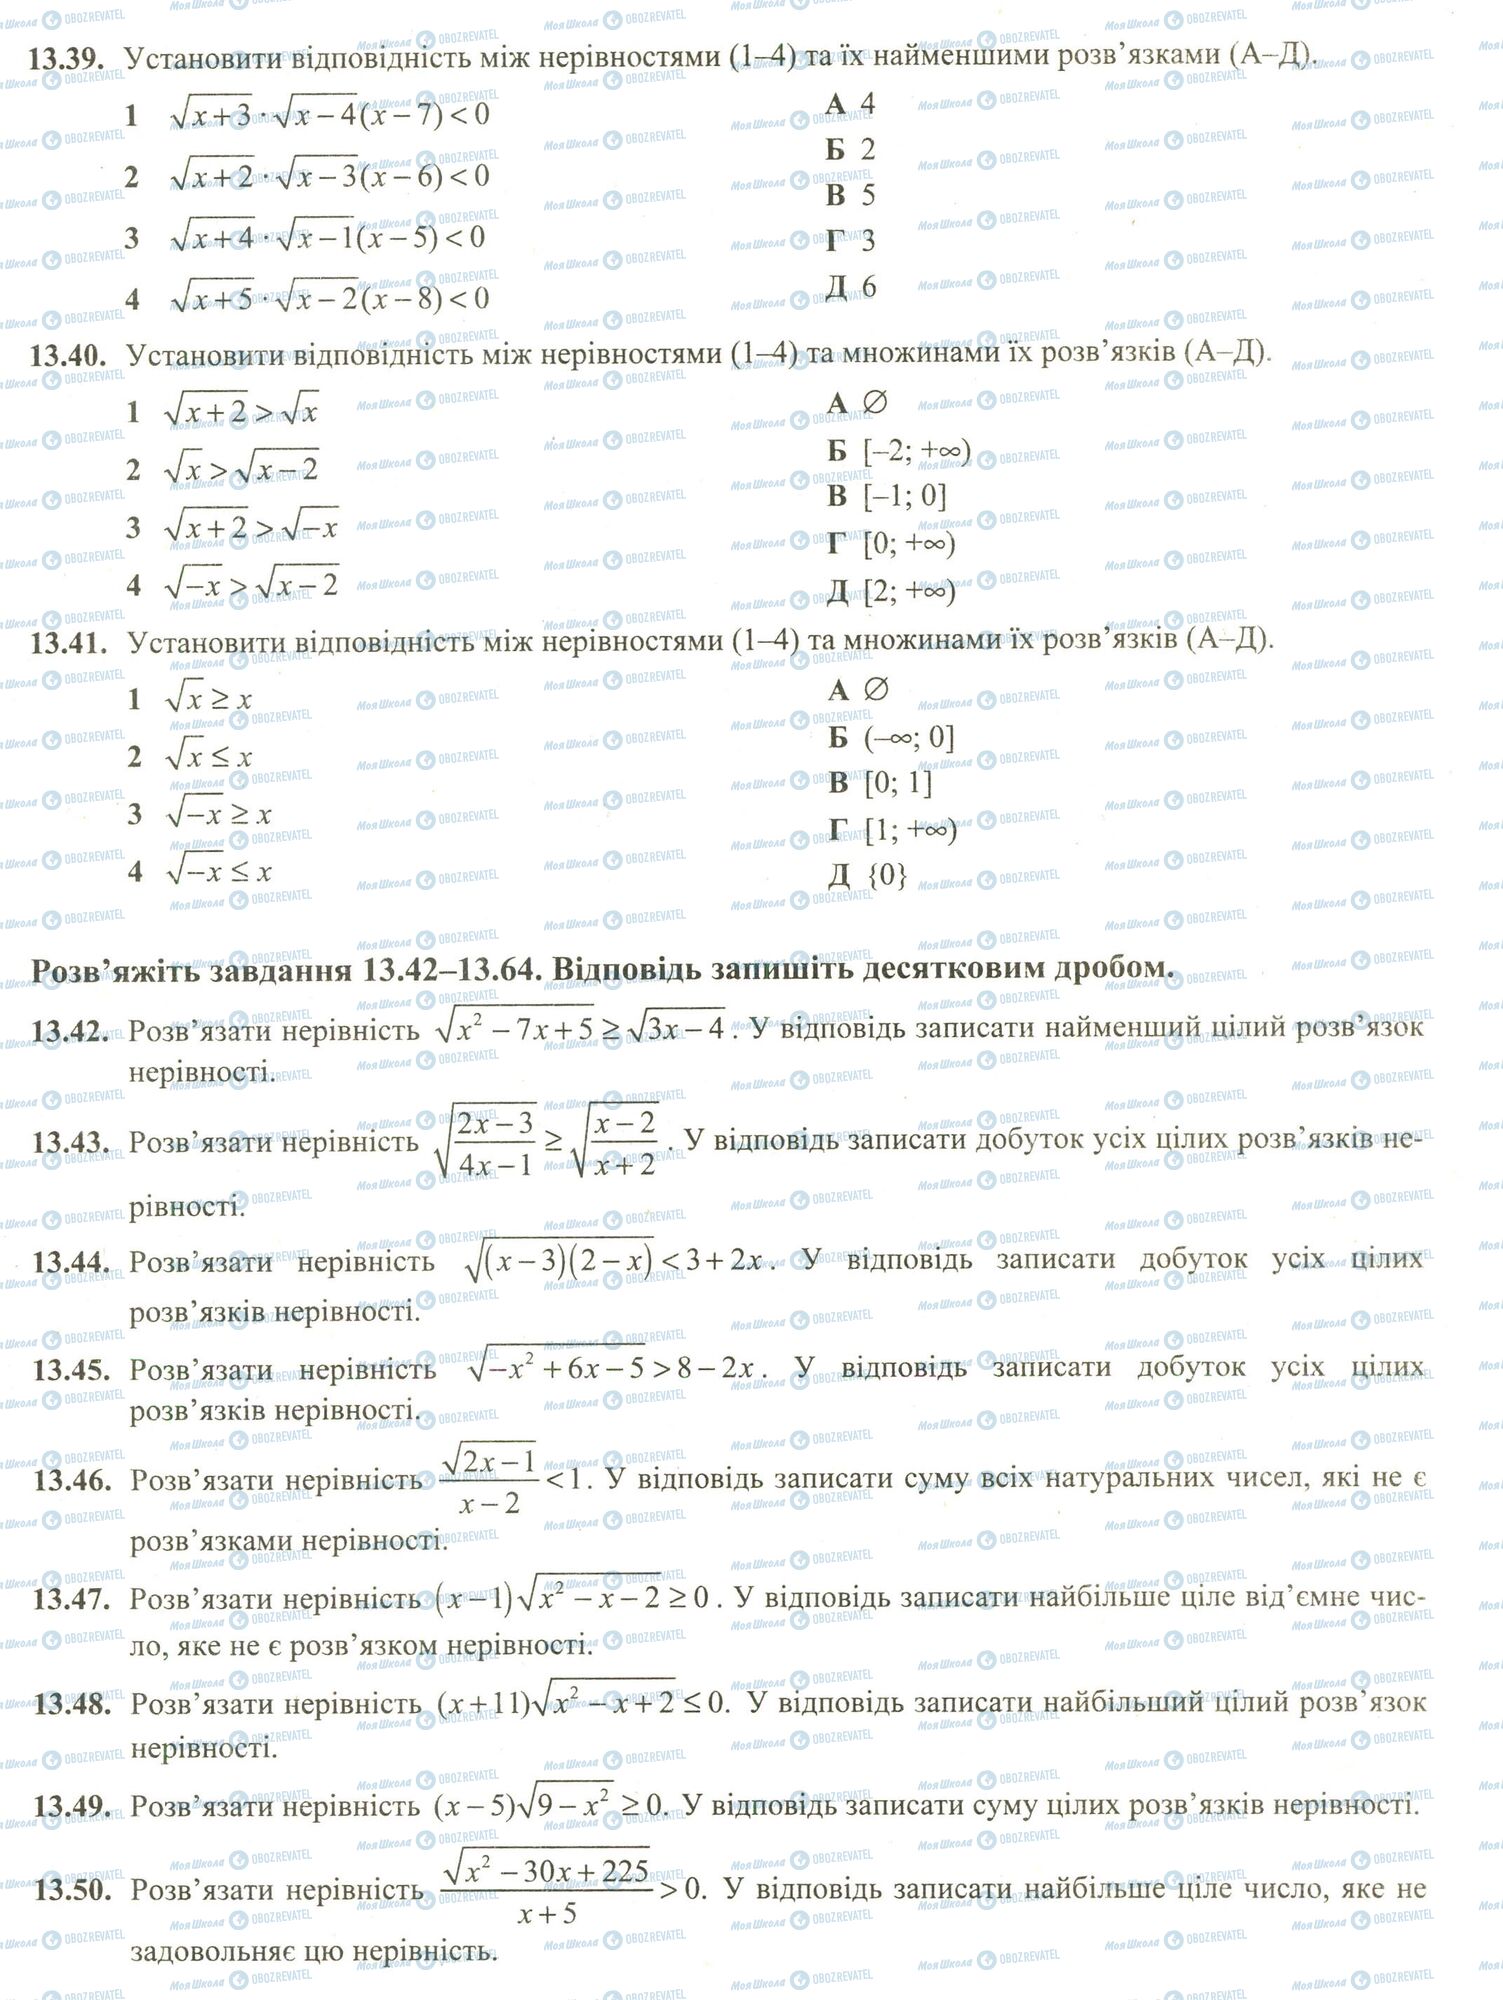 ЗНО Математика 11 класс страница 39-50